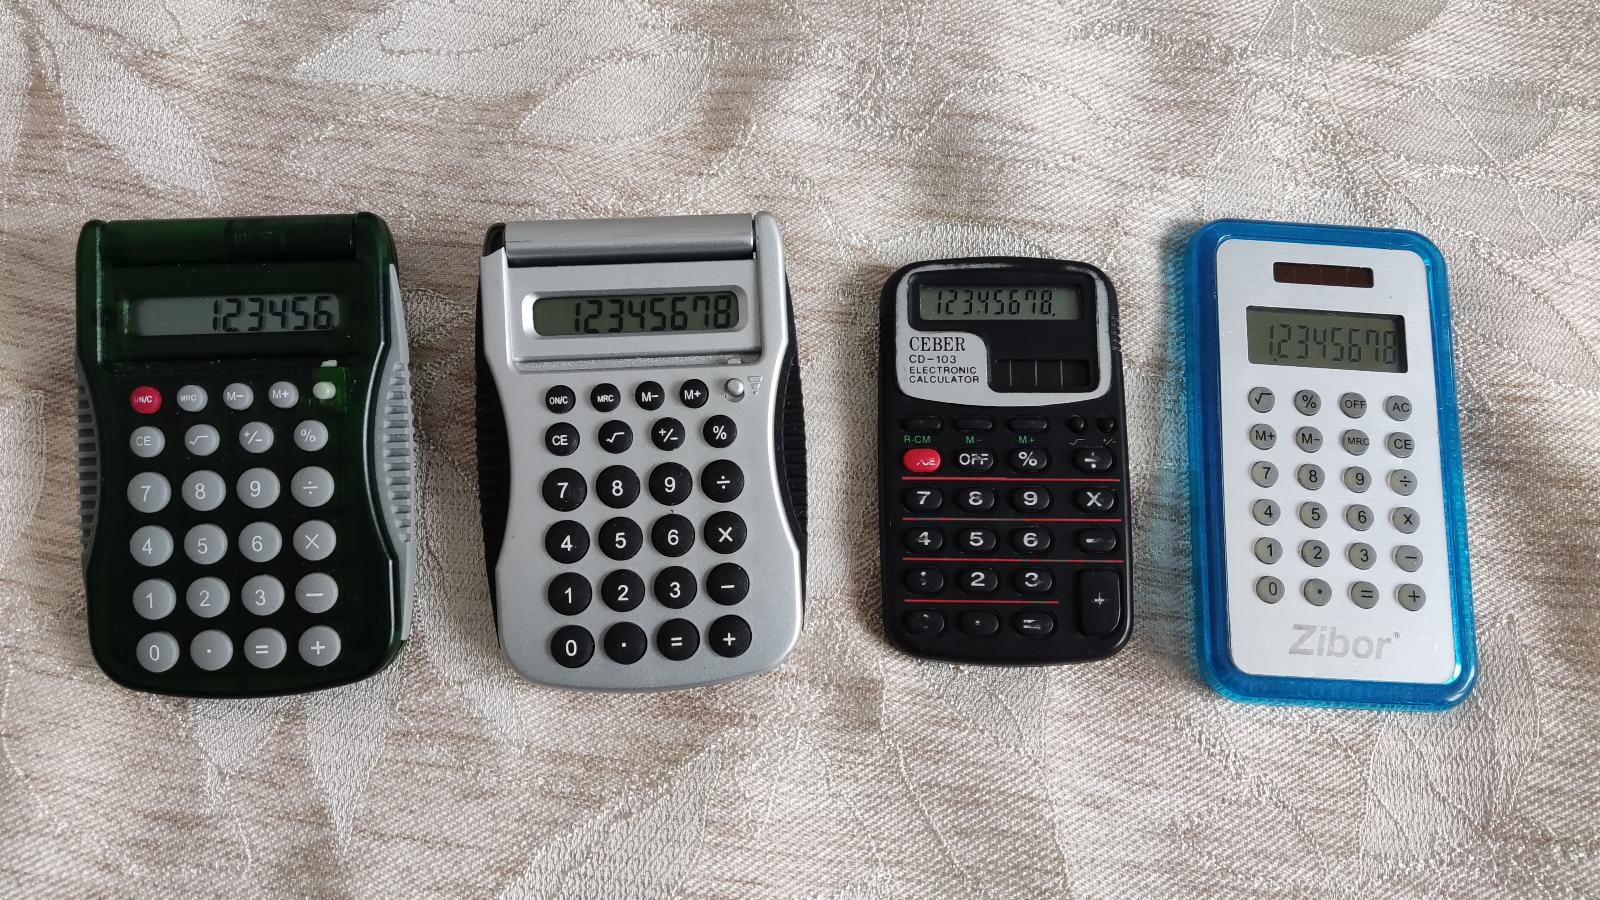 4x kalkulačka MIX - Zibor, CEBER, Volksbank, solárna,... - Počítače a hry